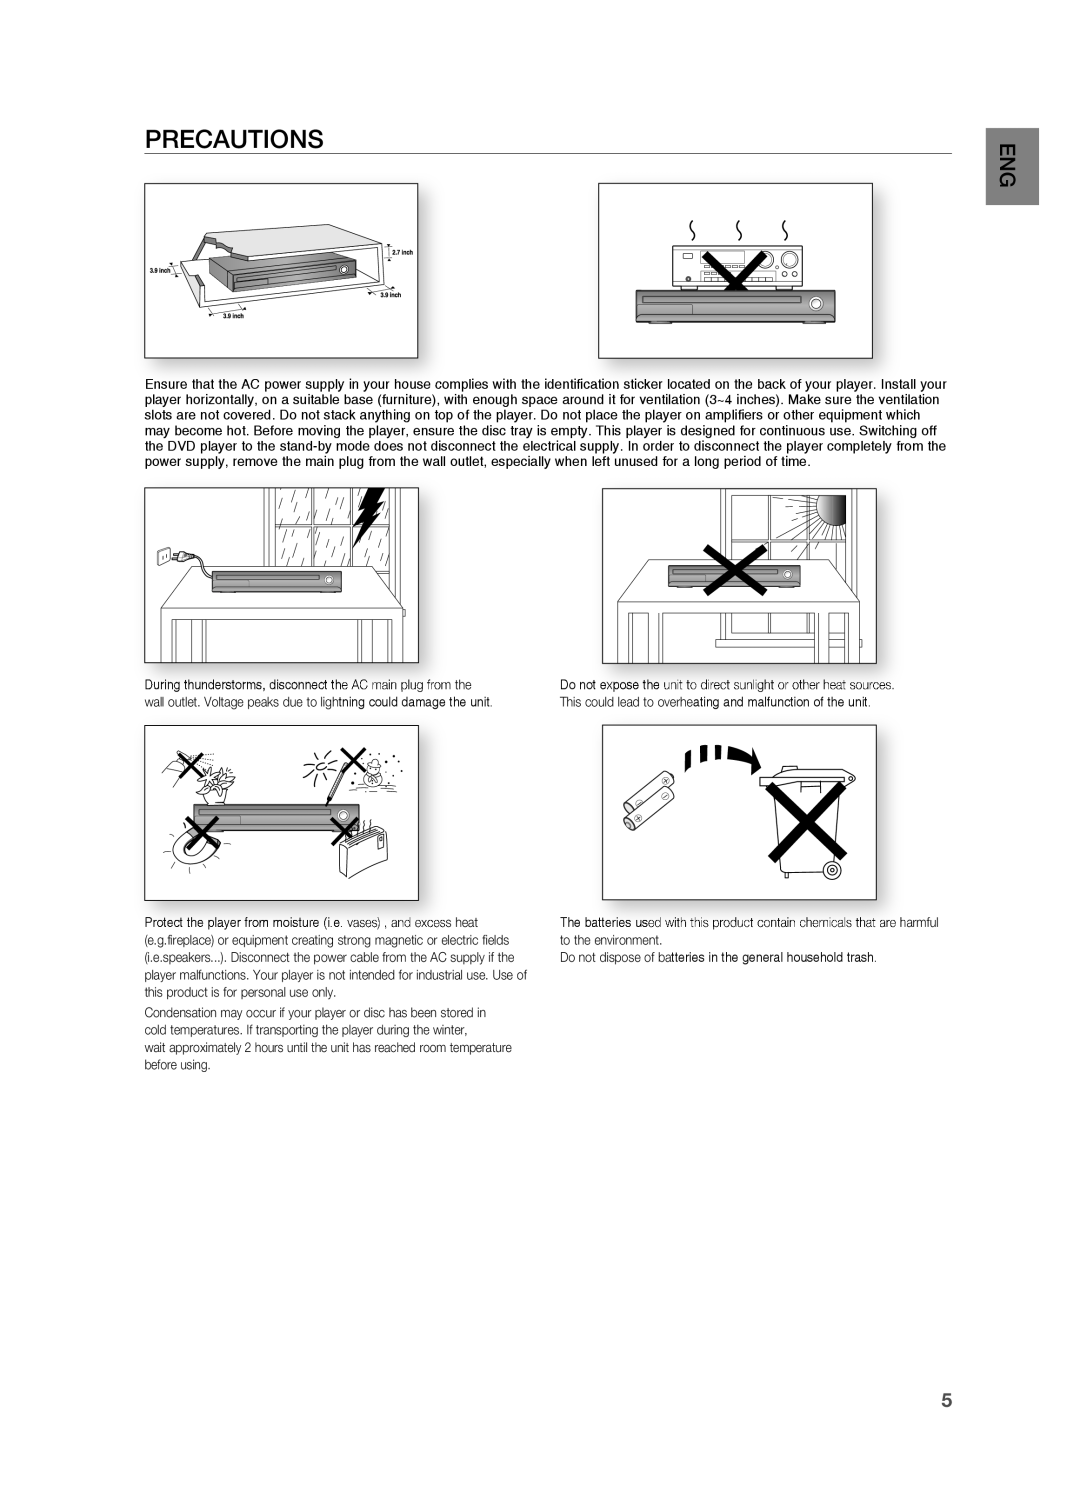 Samsung HT-TWZ415 user manual PrECAUTIONS 